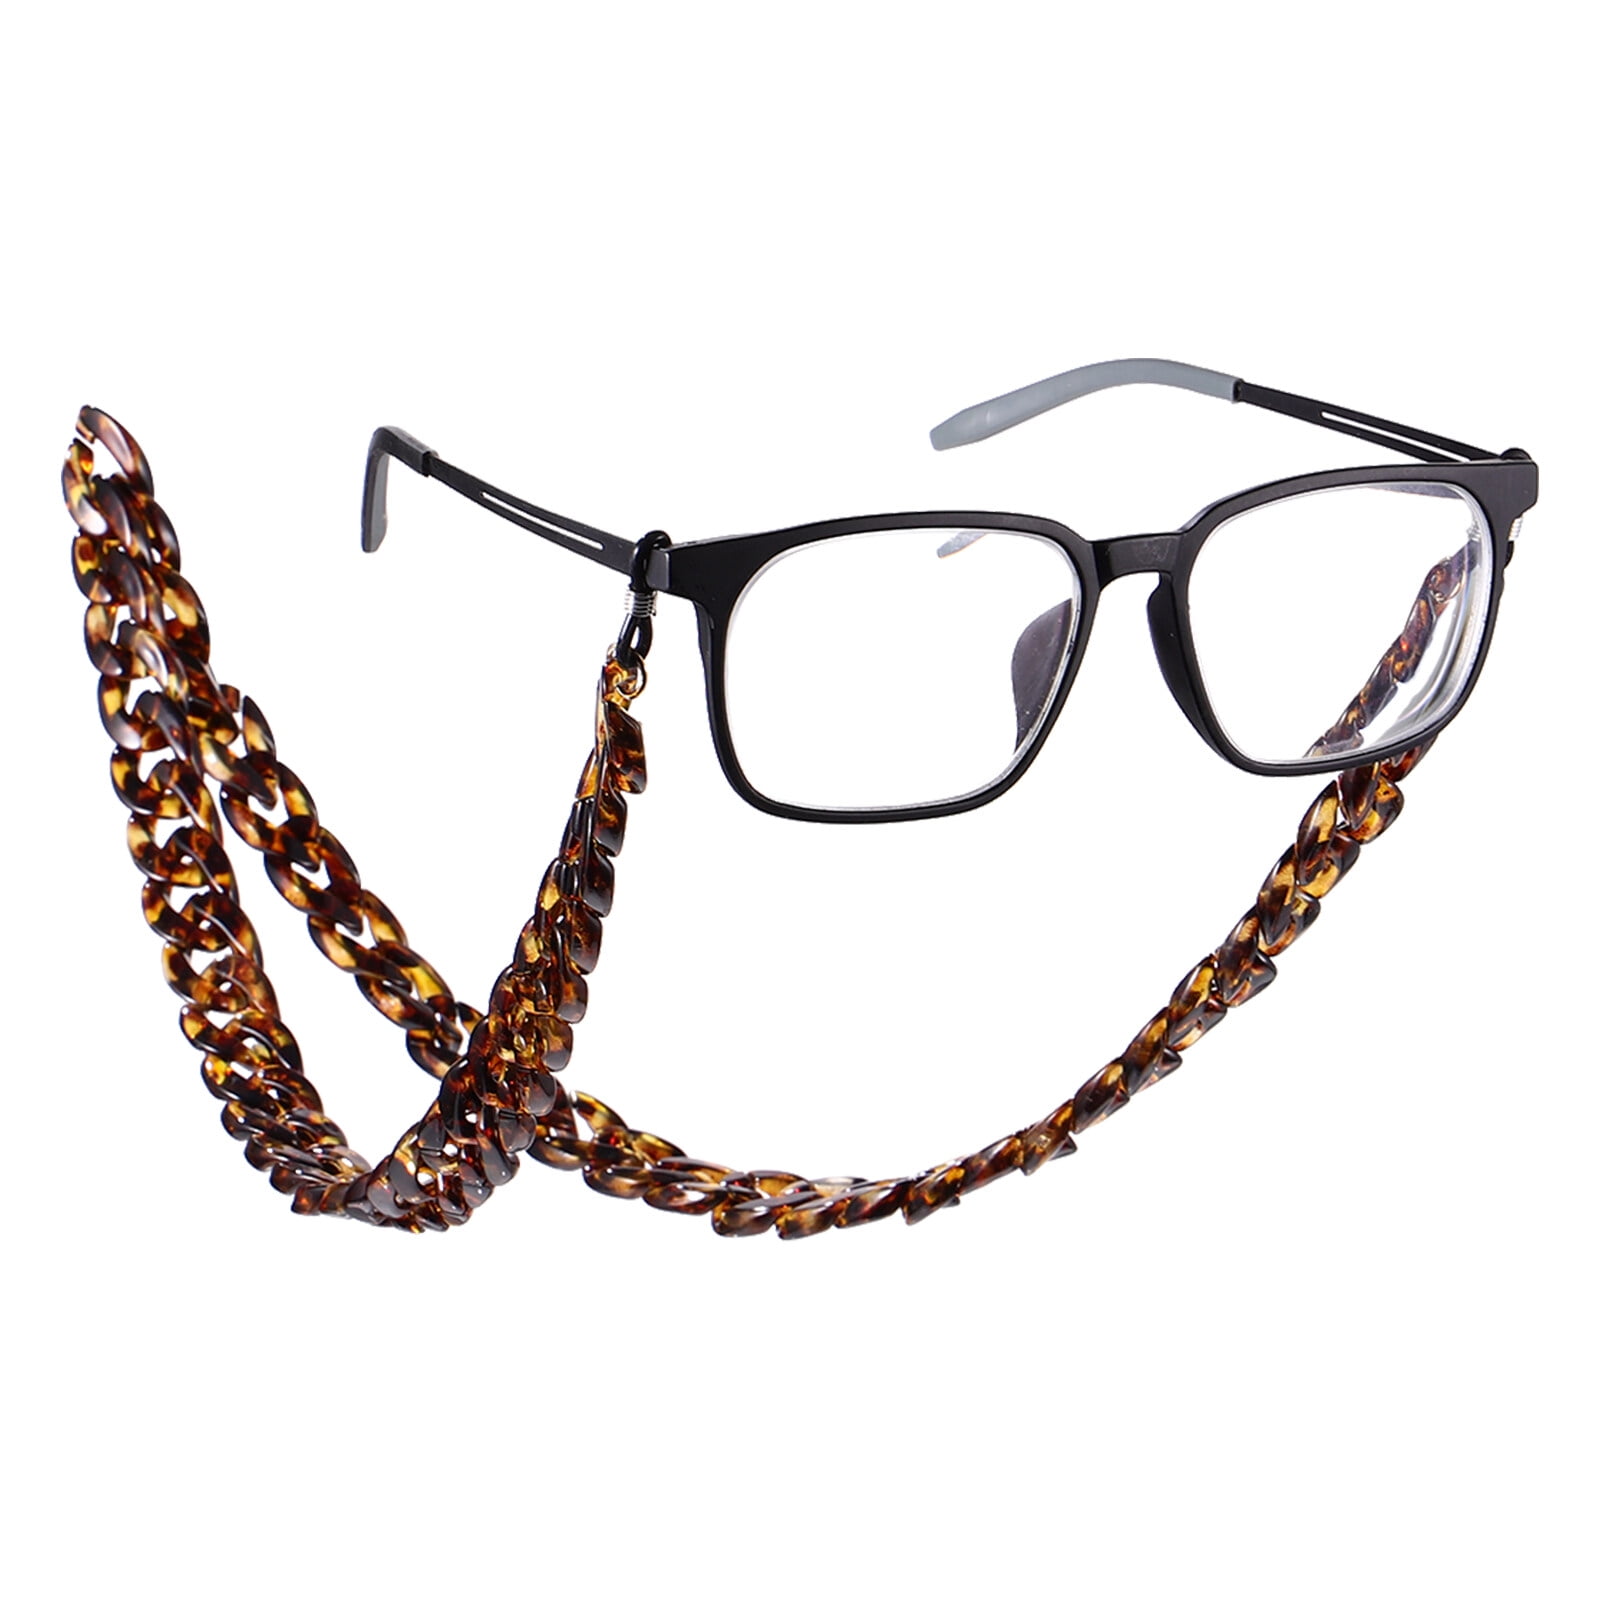 Aspen Braided Leather Eyeglass Chain